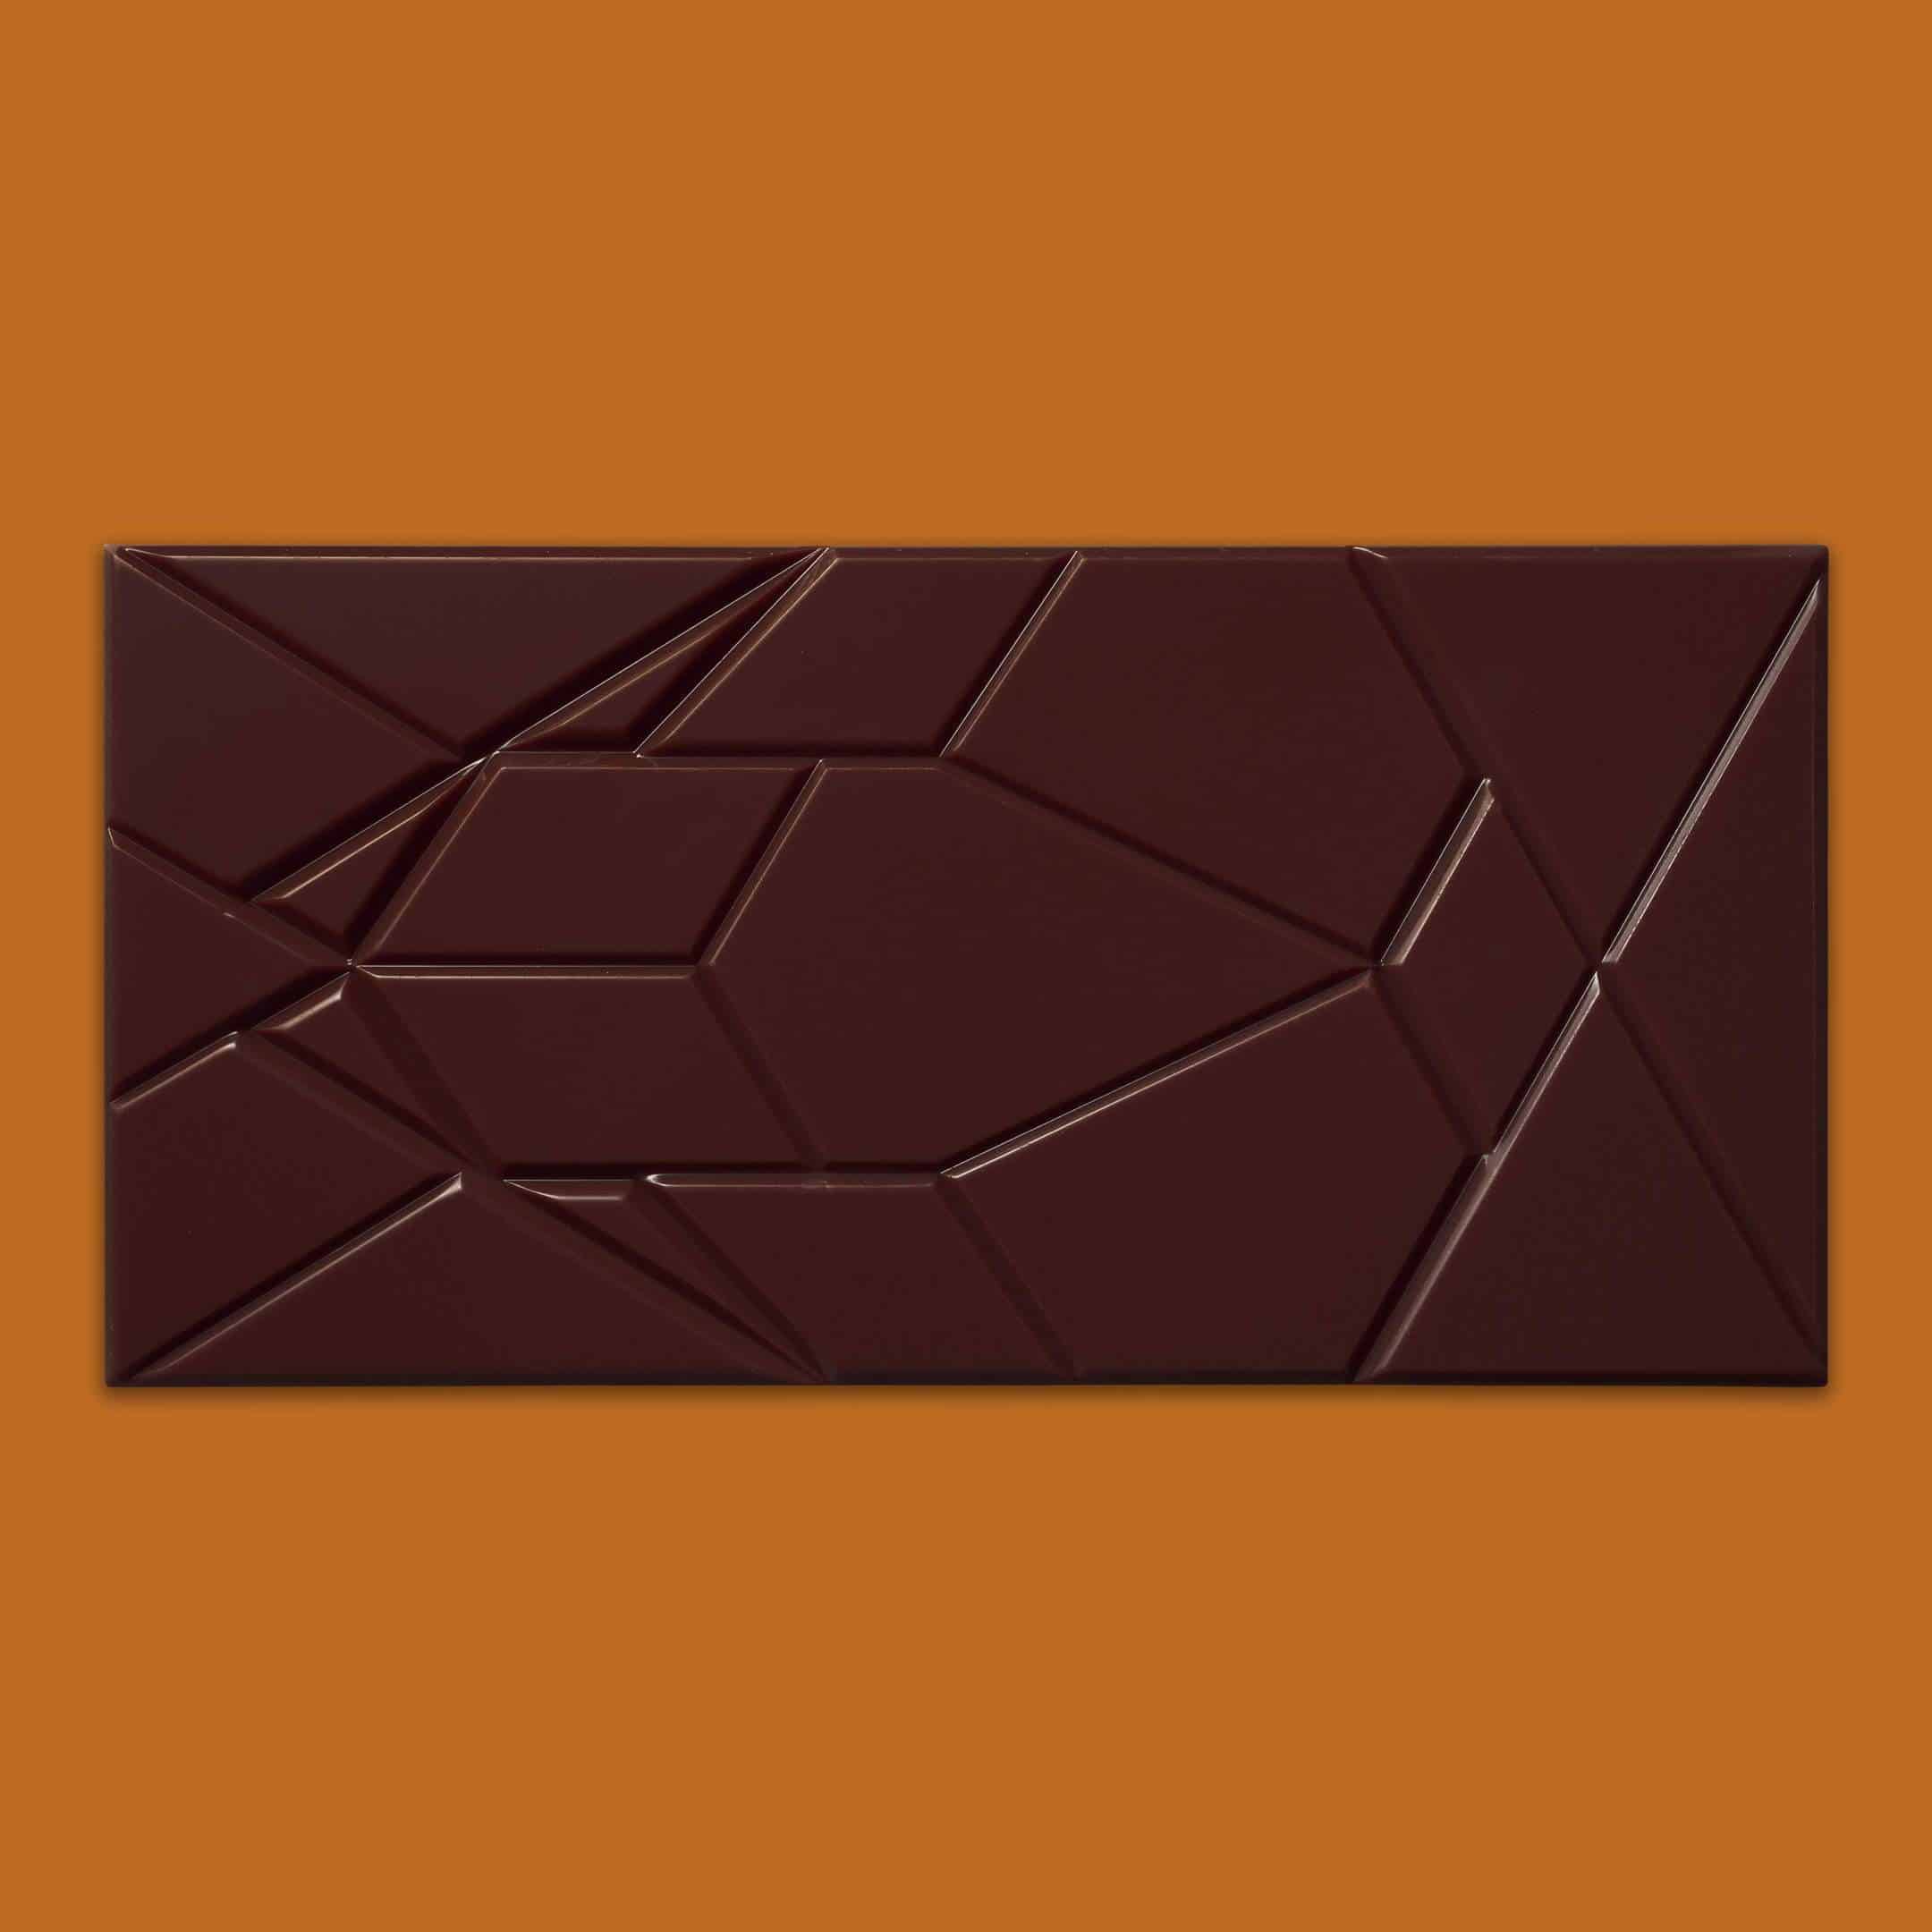 Omnom Chocolate